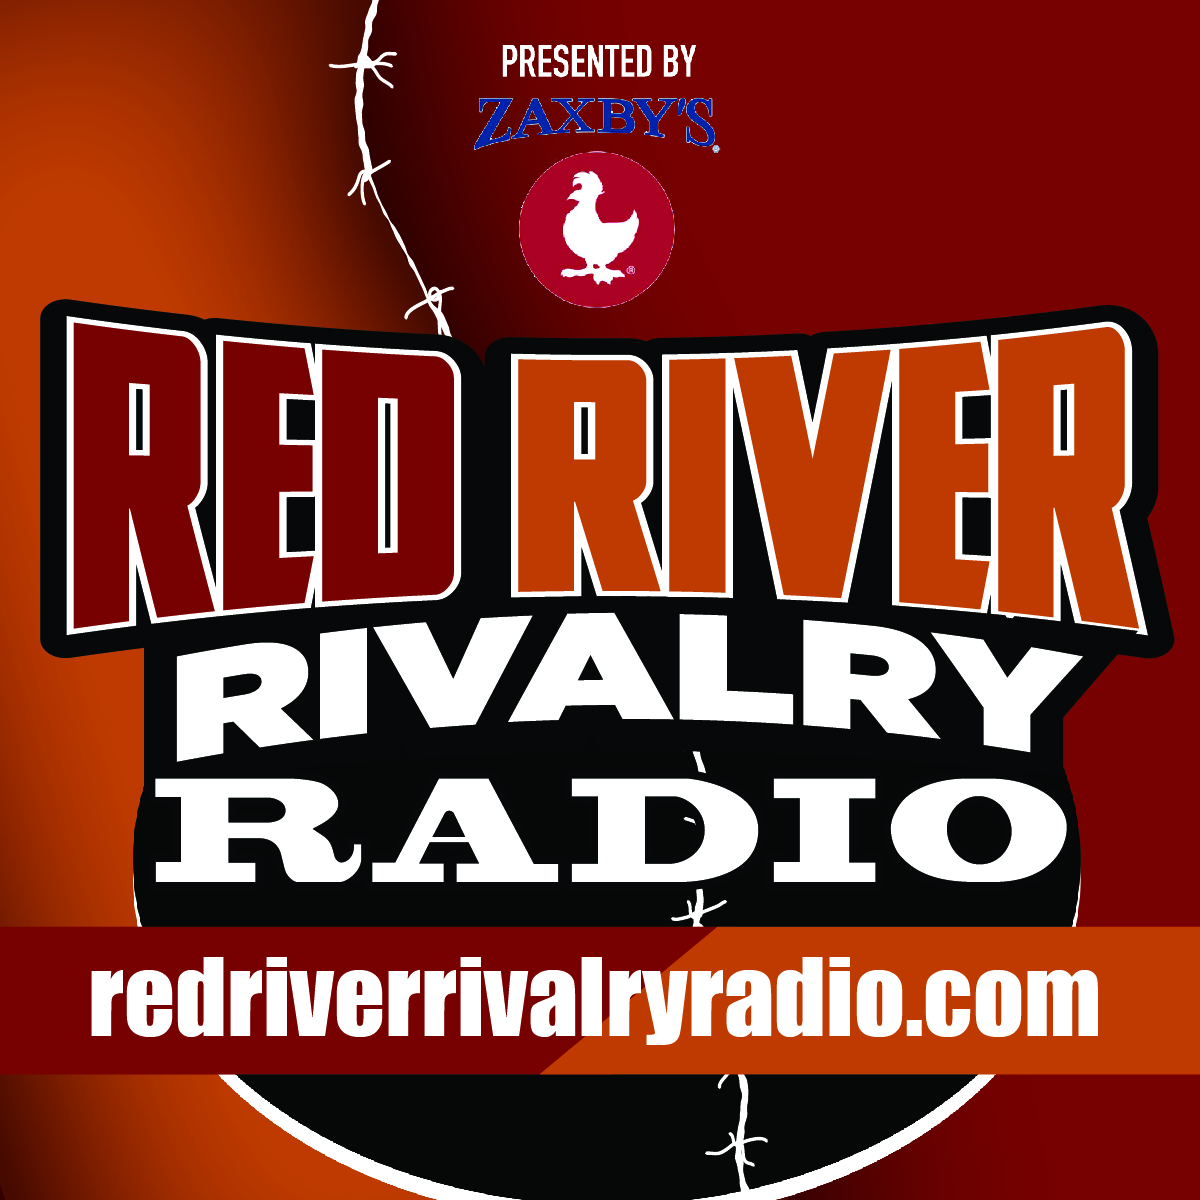 Red River Rivalry - 2009